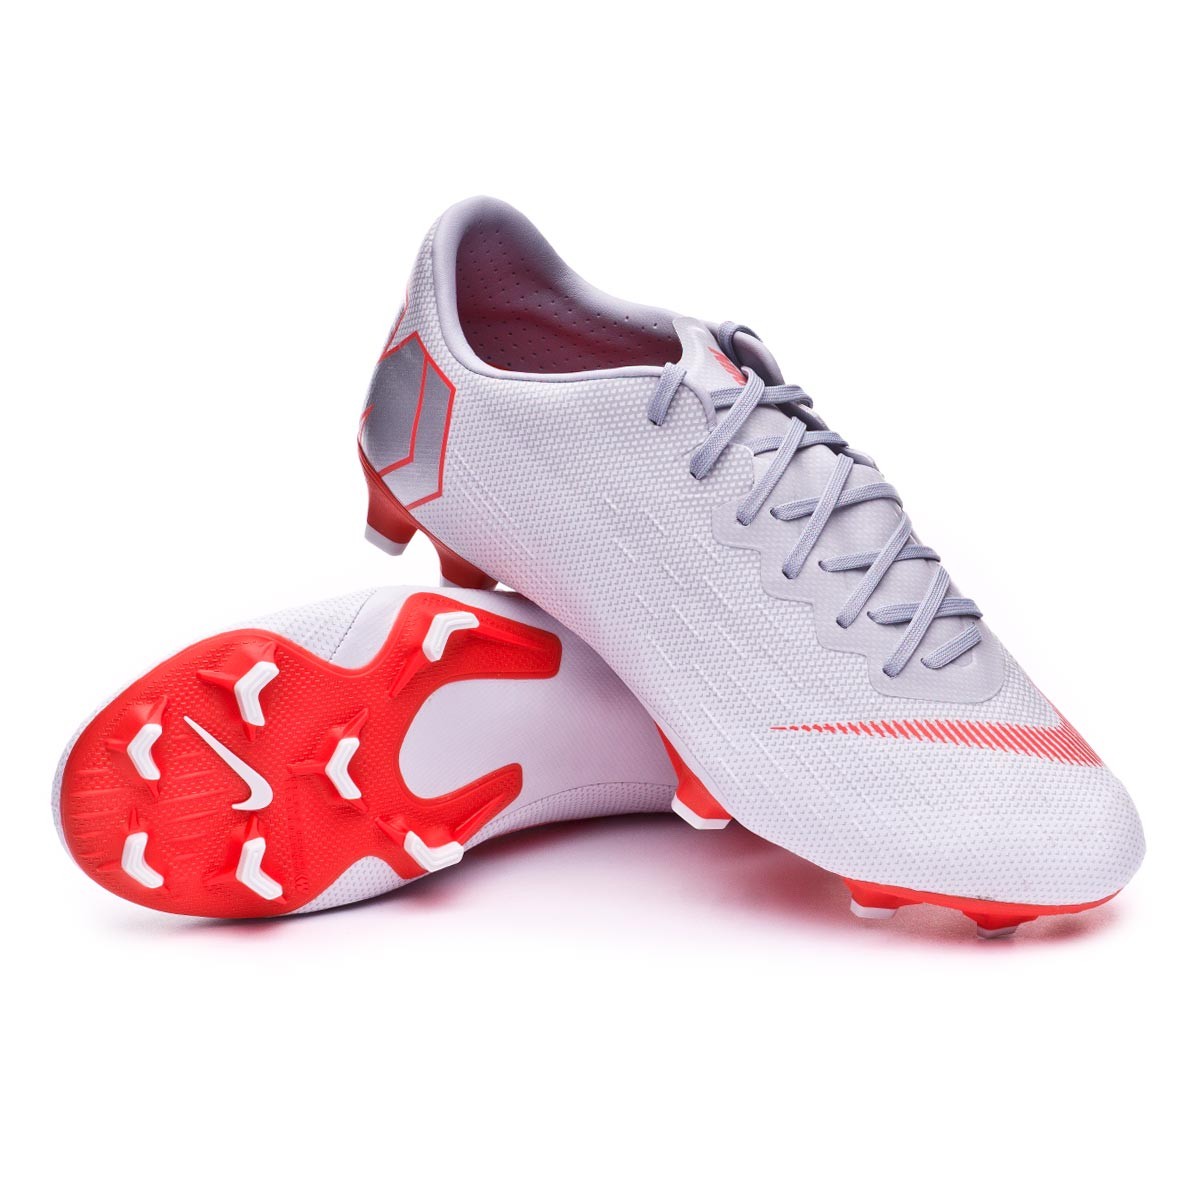 Nike Mercurial Vapor XI sg Socccer Cleats Size 9 eBay